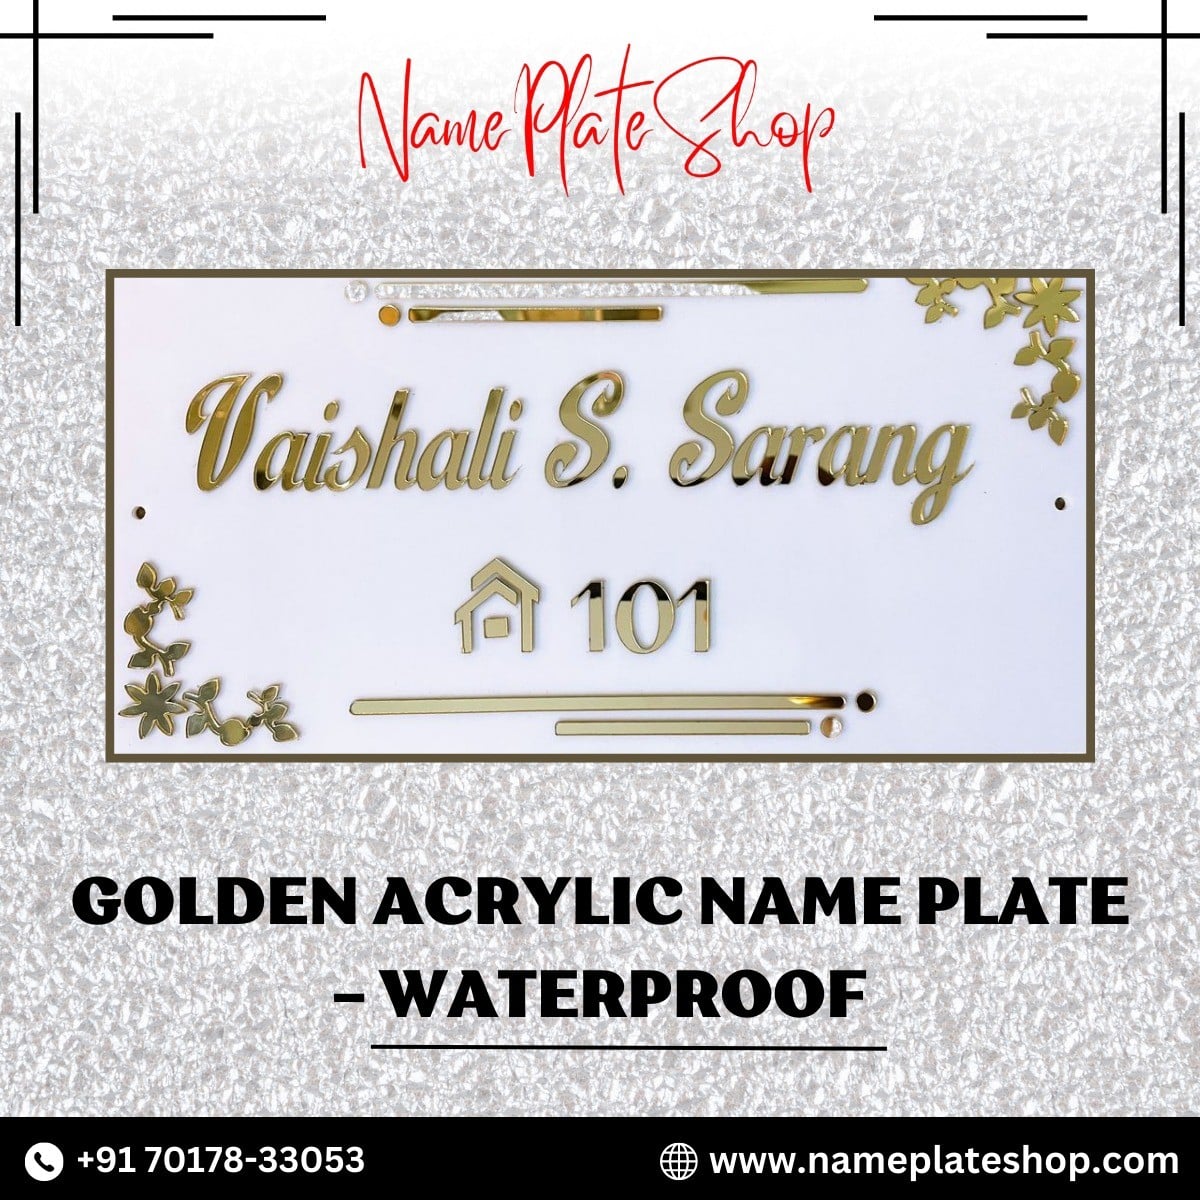 Shop For Waterproof Golden Acrylic Name Plate NamePlateShop